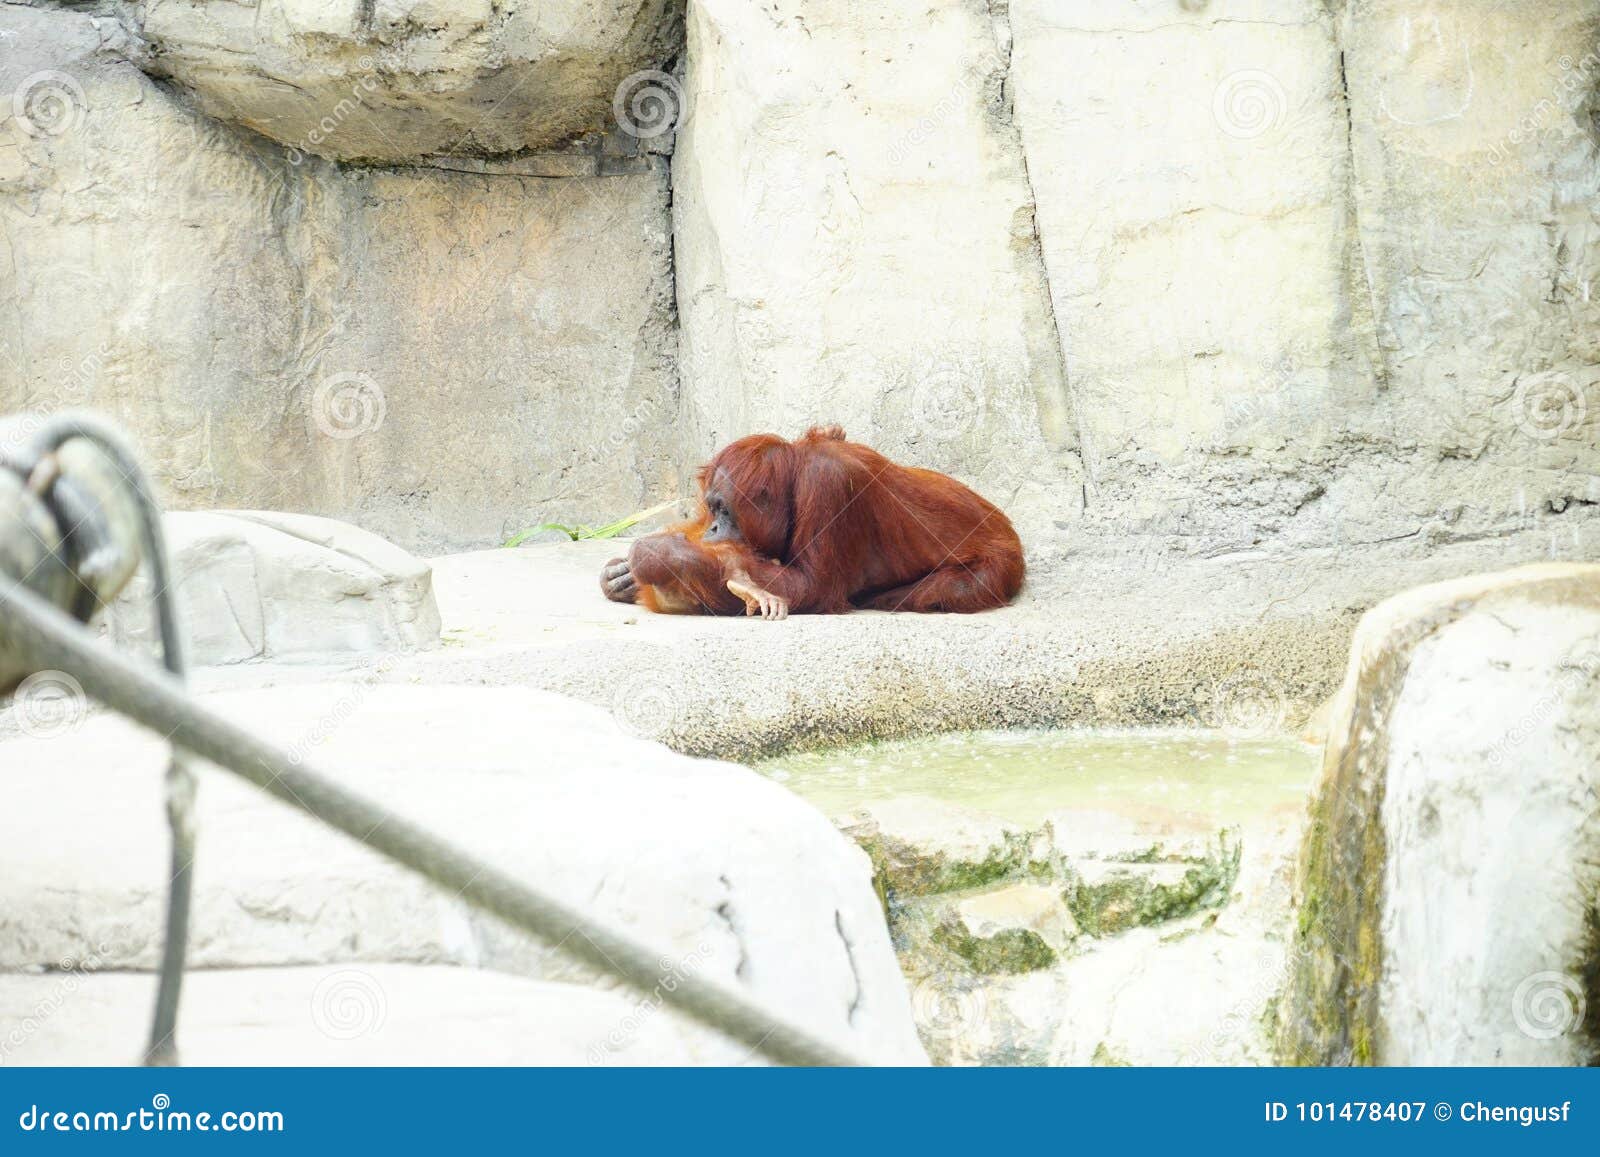 Download Mammal Orangutan Primate Ape And Her Baby Stock Image - Image of jungle, primate: 101478407